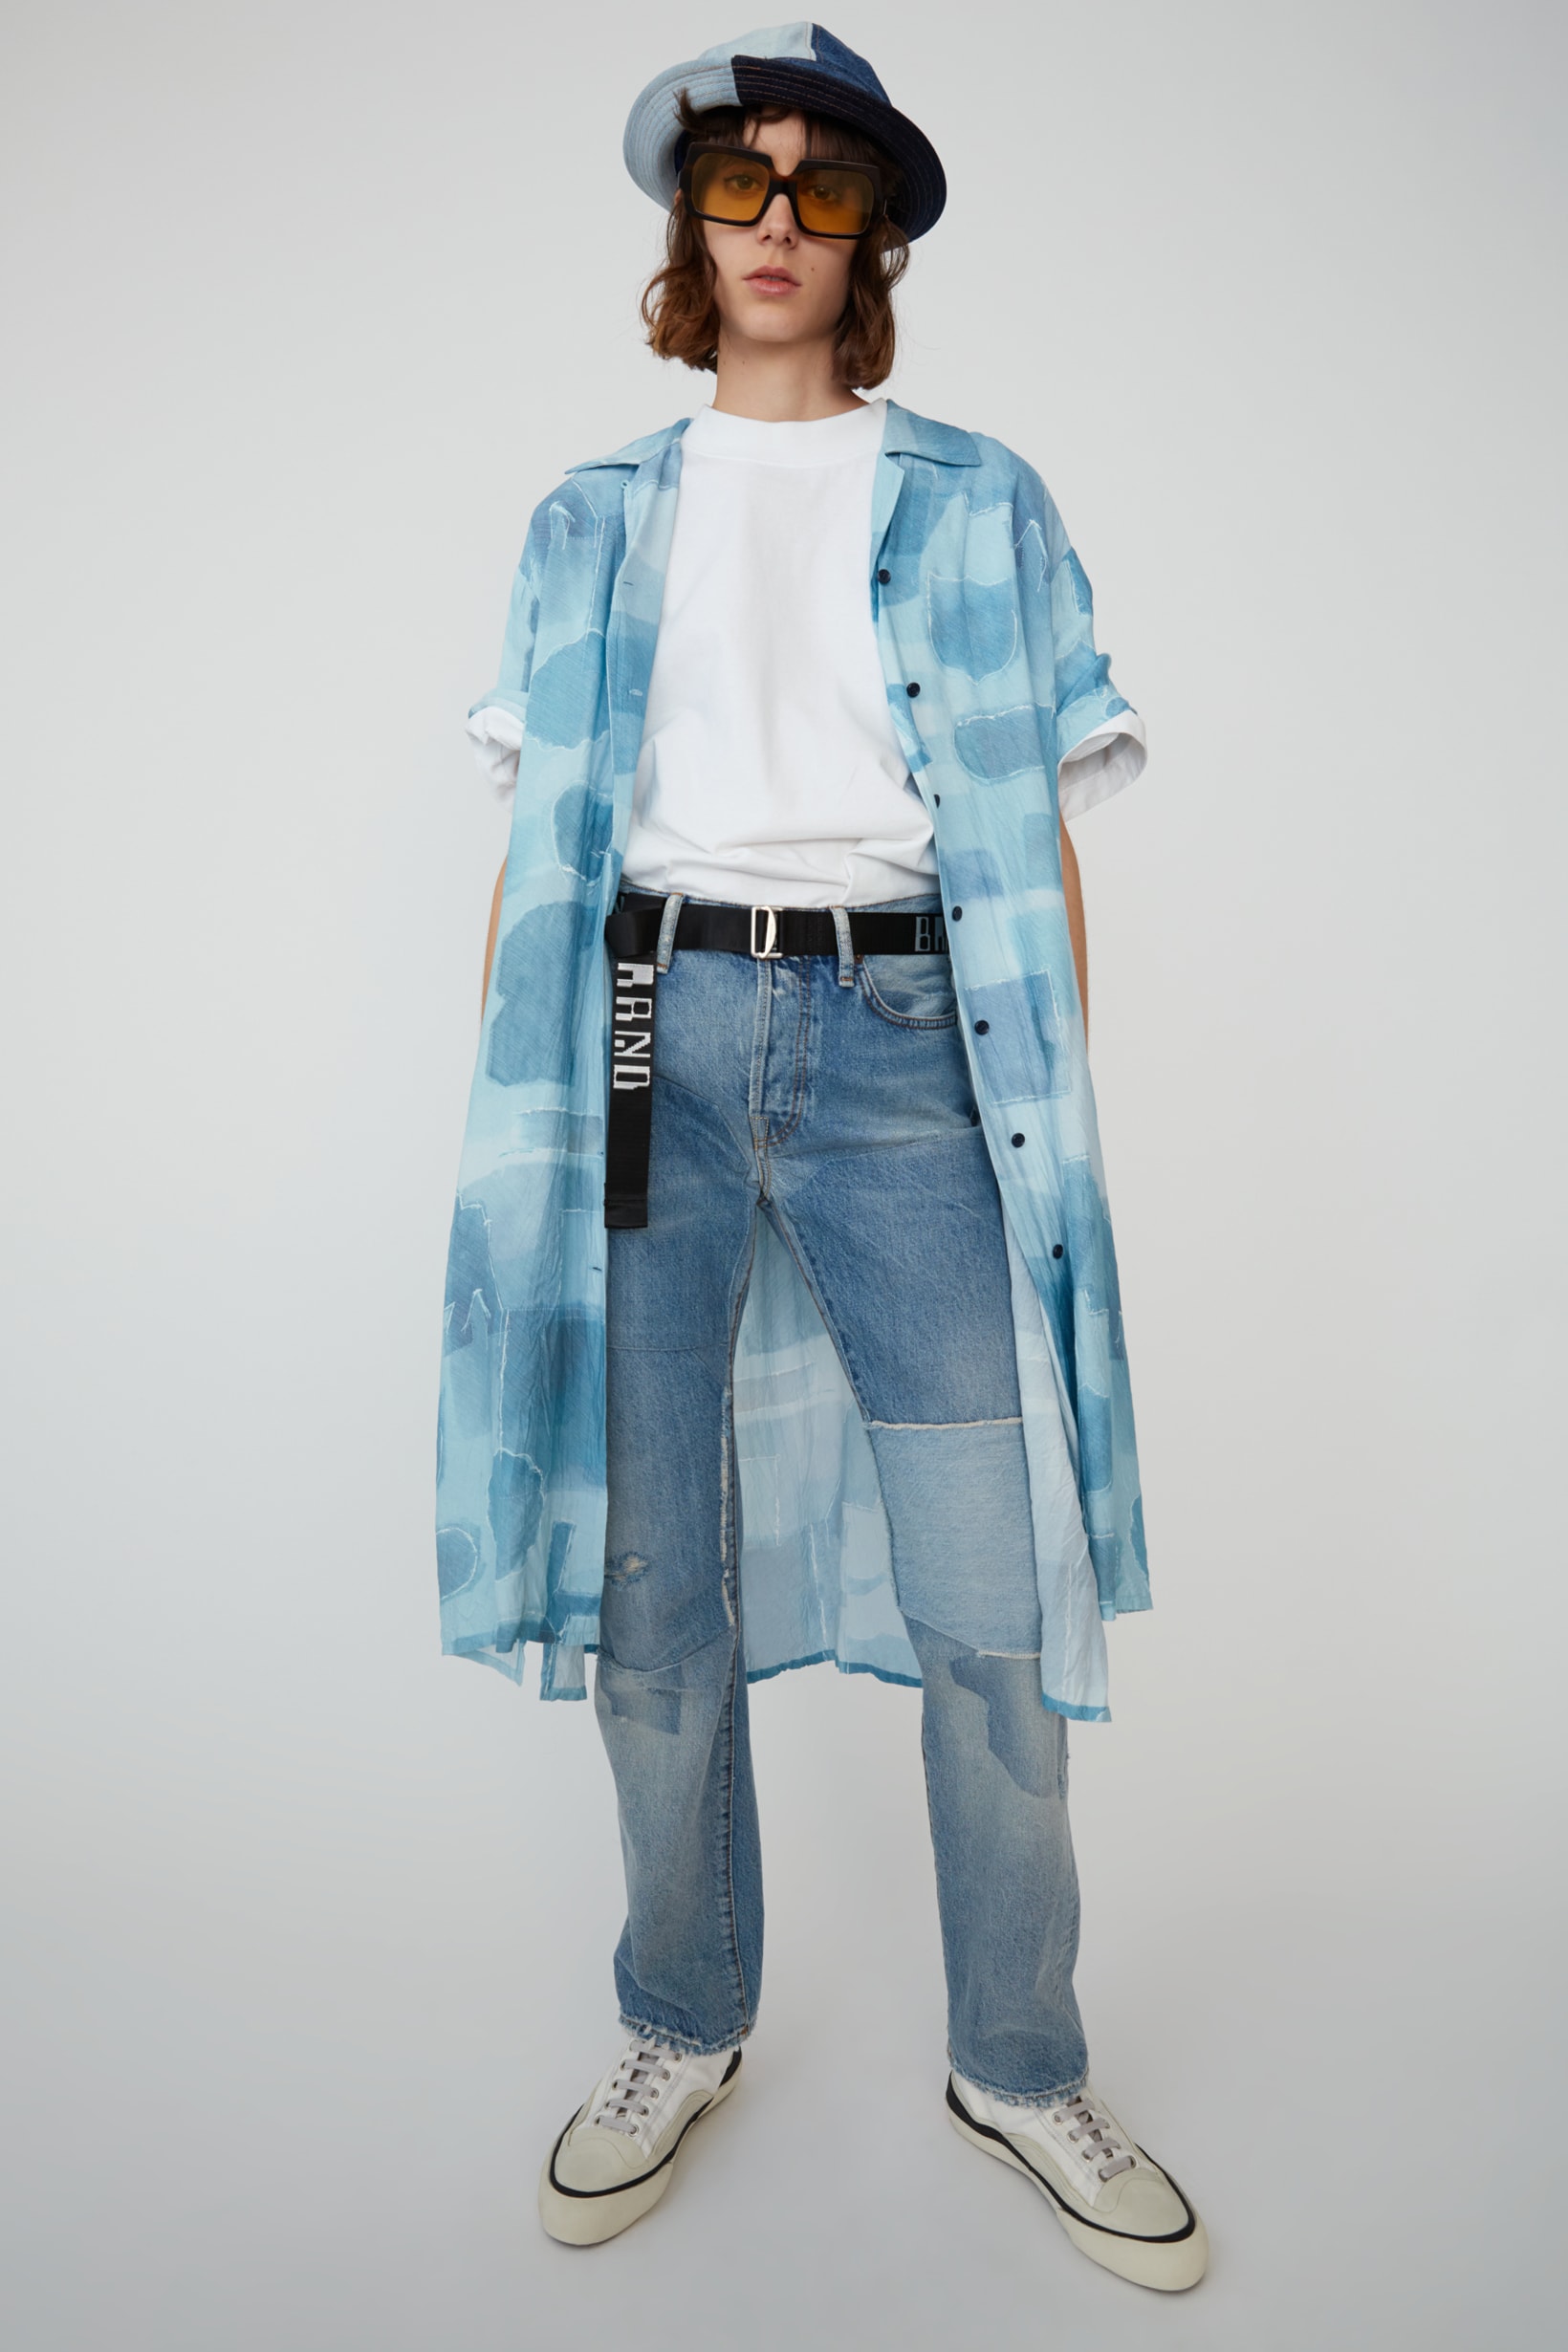 Acne Studios Spring Summer 2019 Denim Collection Shirt Jeans Hat Blue T-shirt White